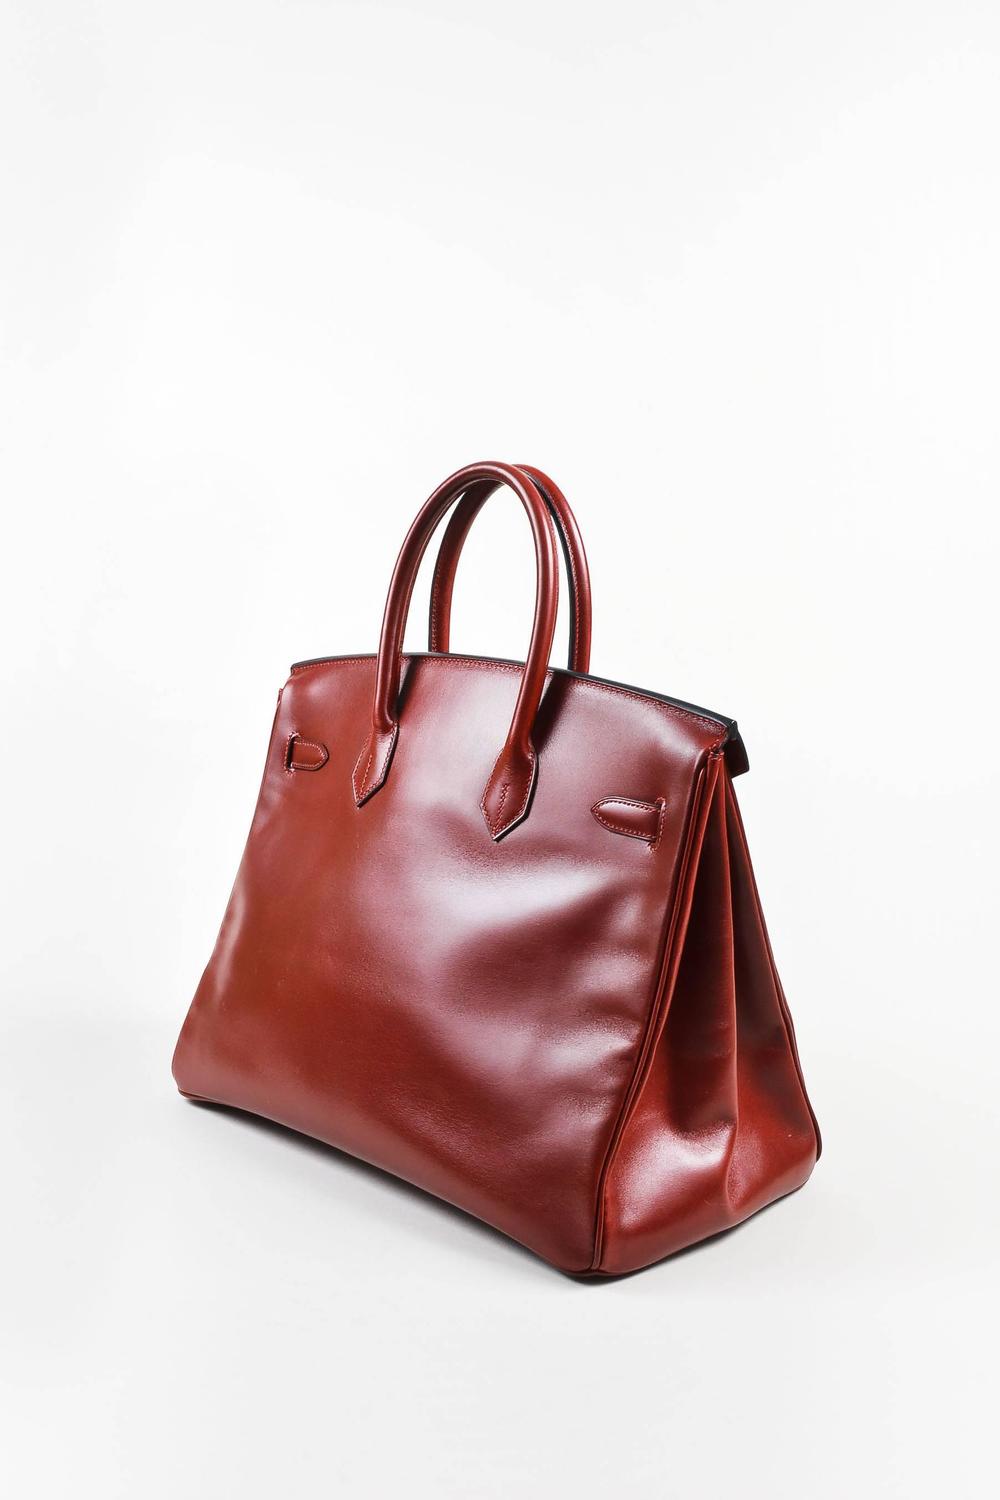 Hermes Oxblood Red Box Calf Leather 35cm \u0026quot;Birkin\u0026quot; Handbag For Sale ...  